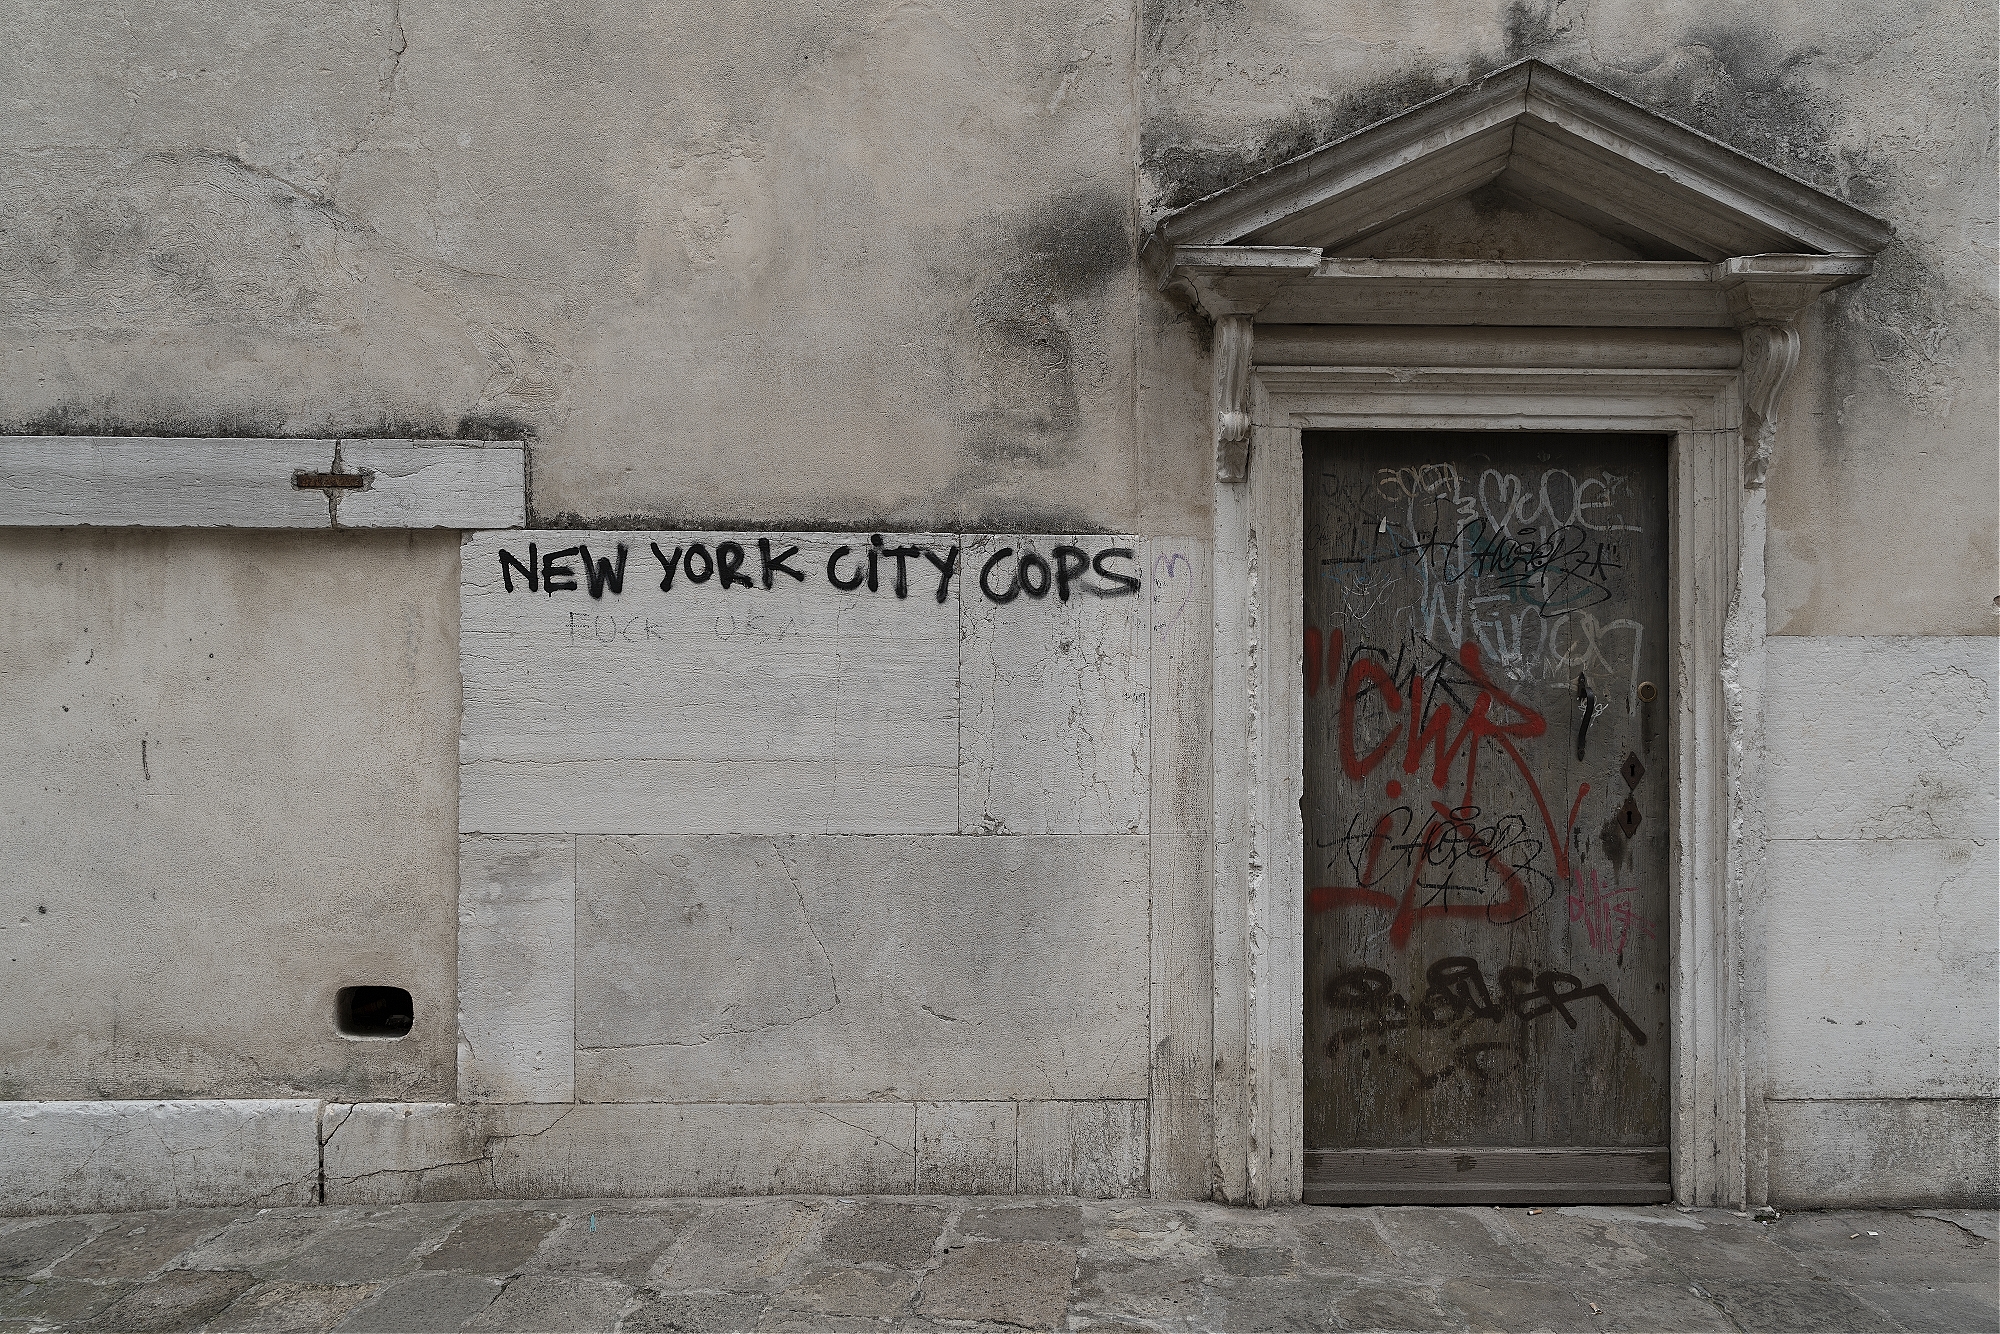 New York City Cops graffiti, Venice